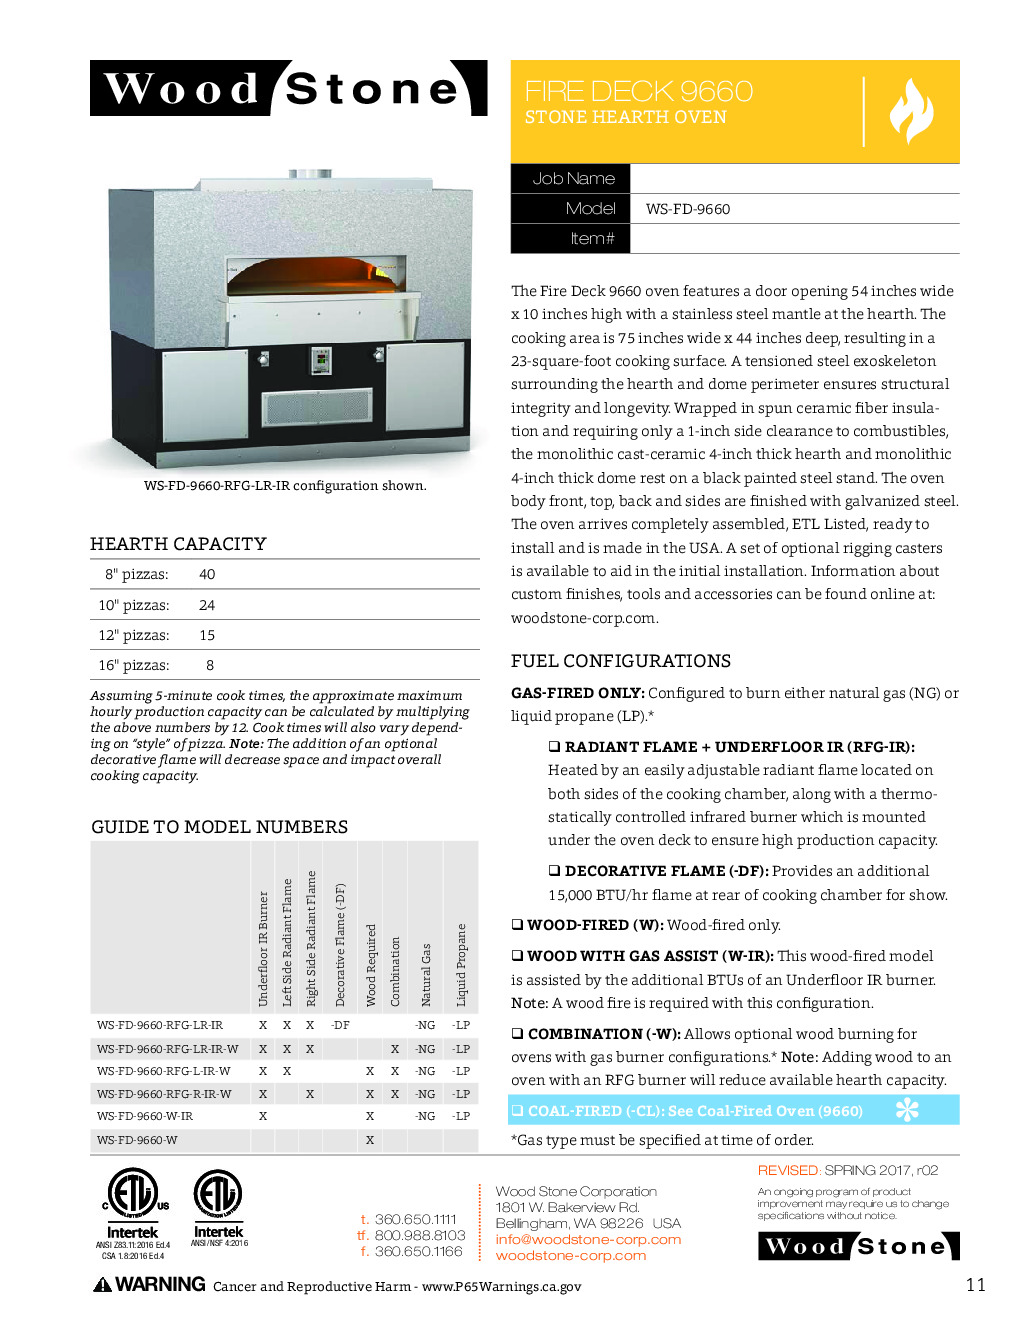 Wood Stone FD-9660-RFGLR-IR Wood / Coal / Gas Fired Oven